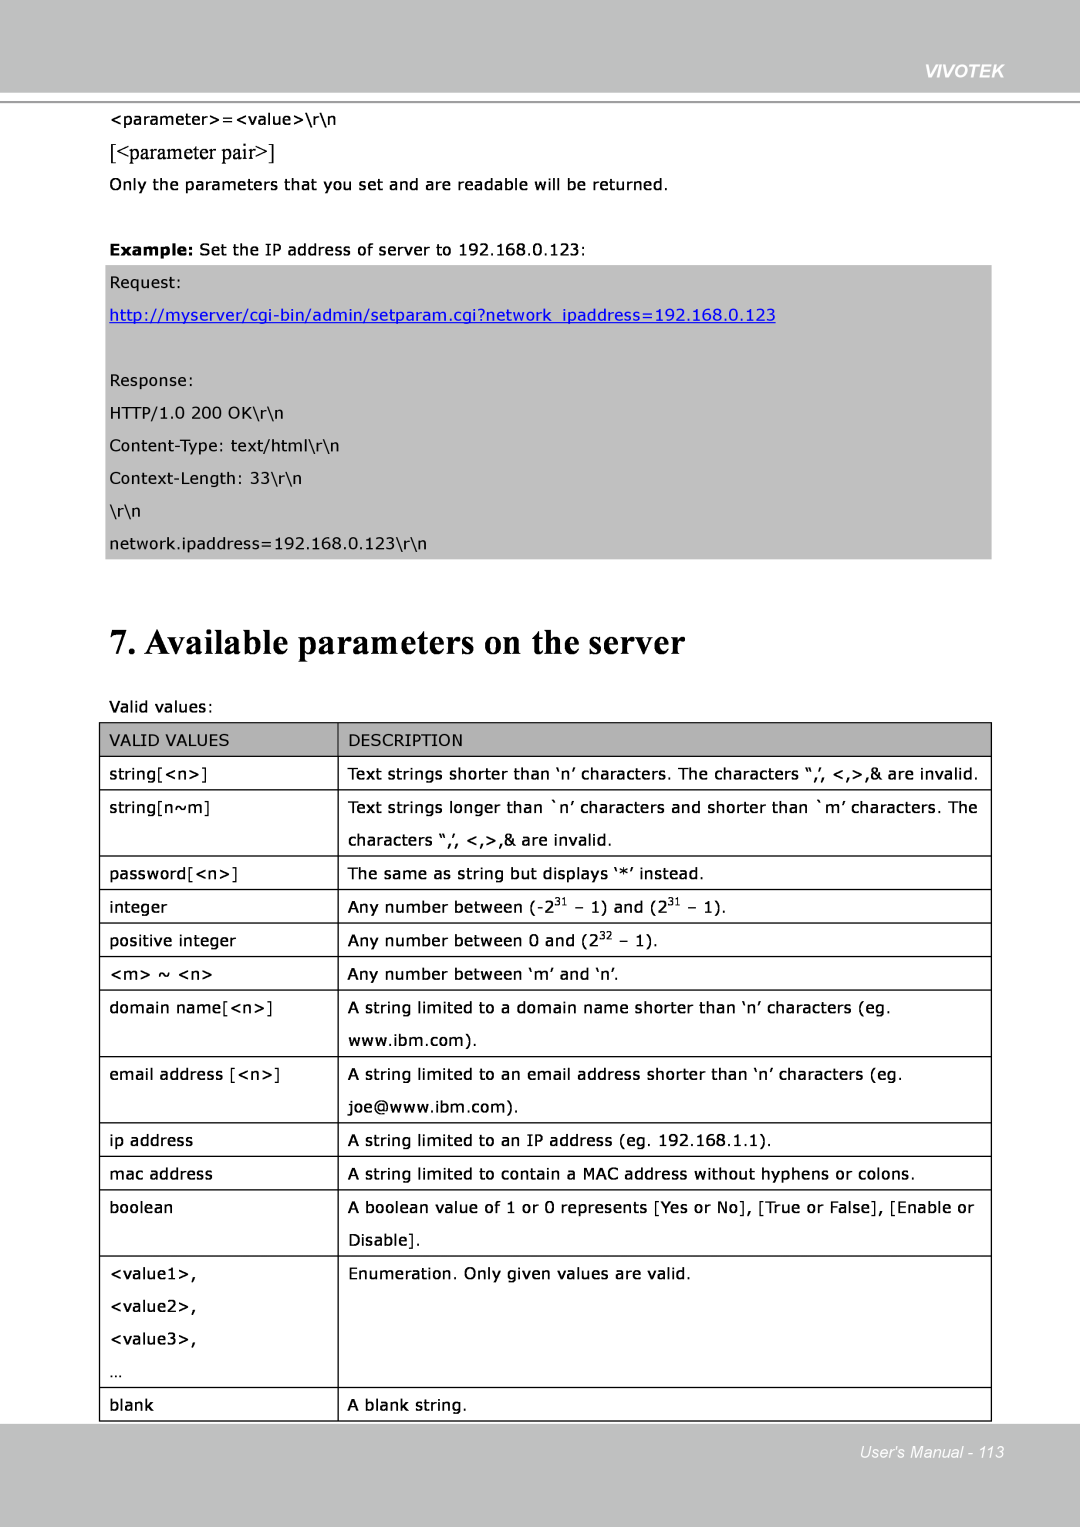 Vivotek IP8151 manual Available parameters on the server, <parameter pair>, Vivotek, Users Manual 